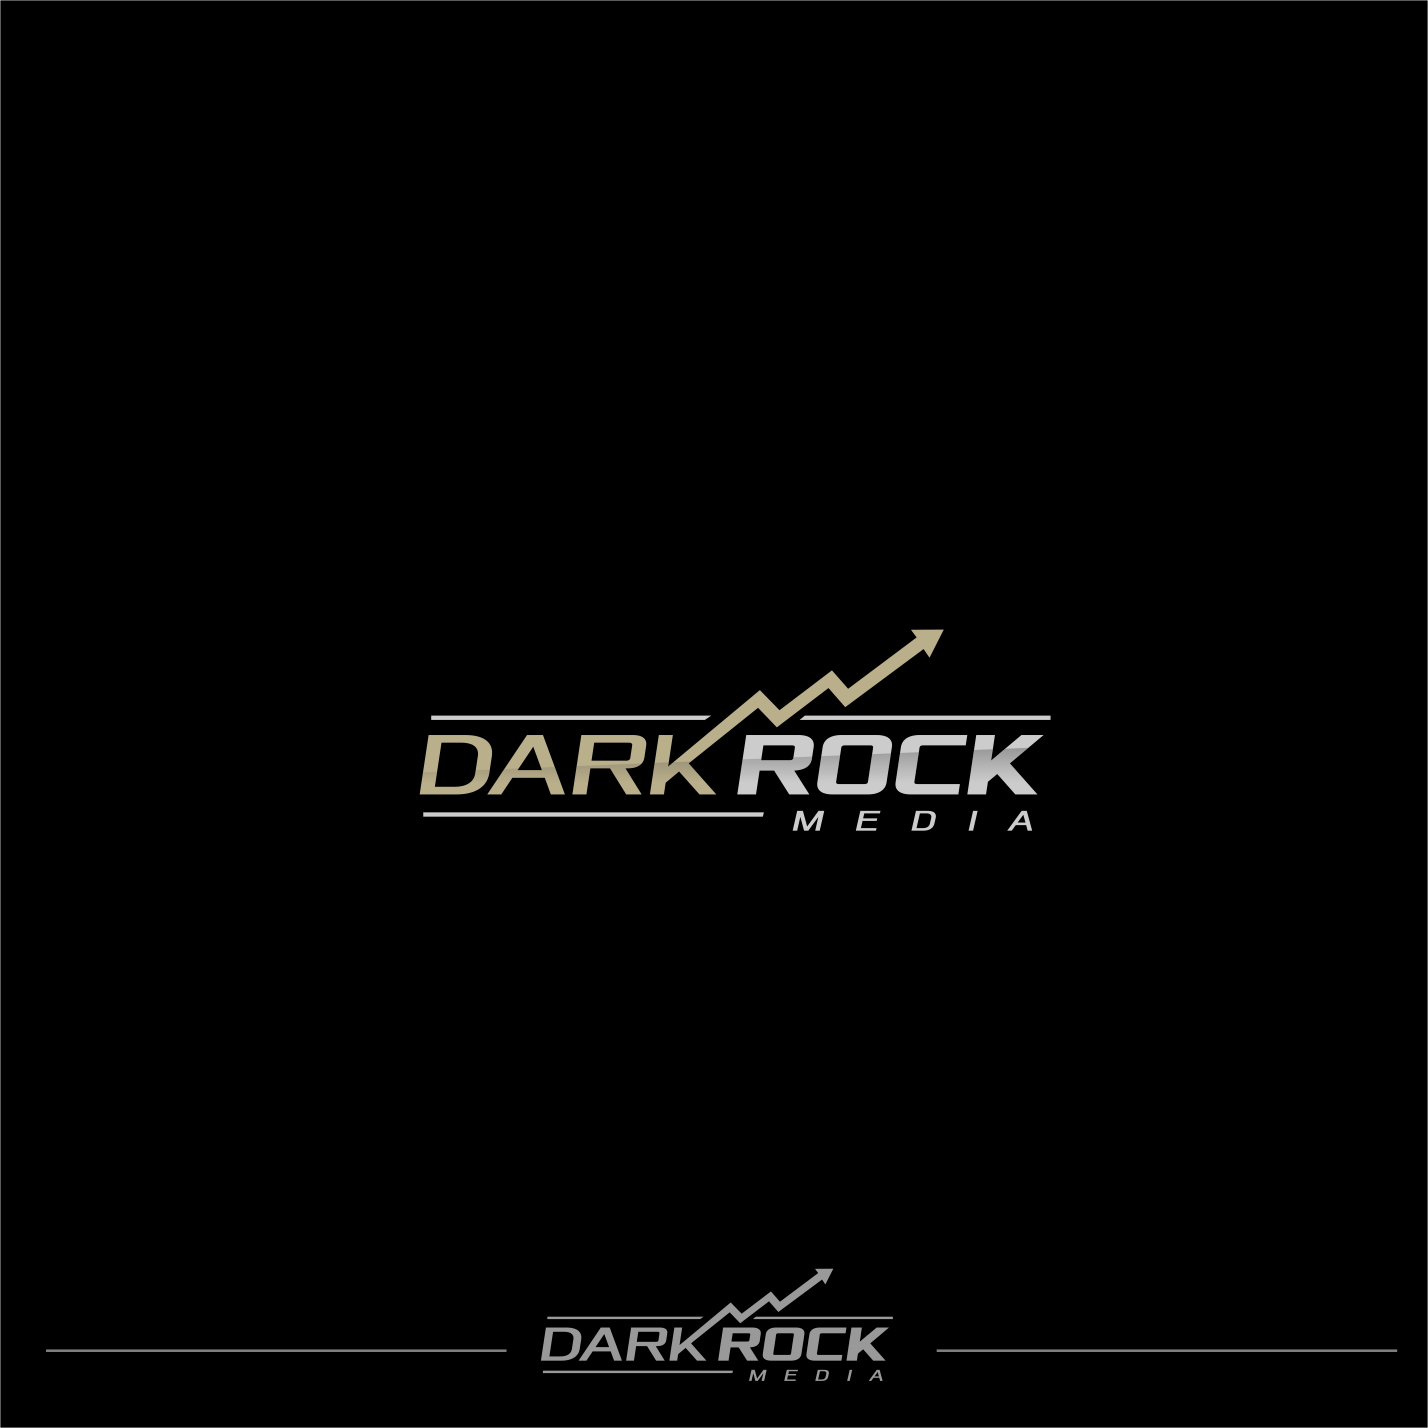 Rock Company Logo - 77 Upmarket Logo Designs | Advertising Logo Design Project for Dark ...